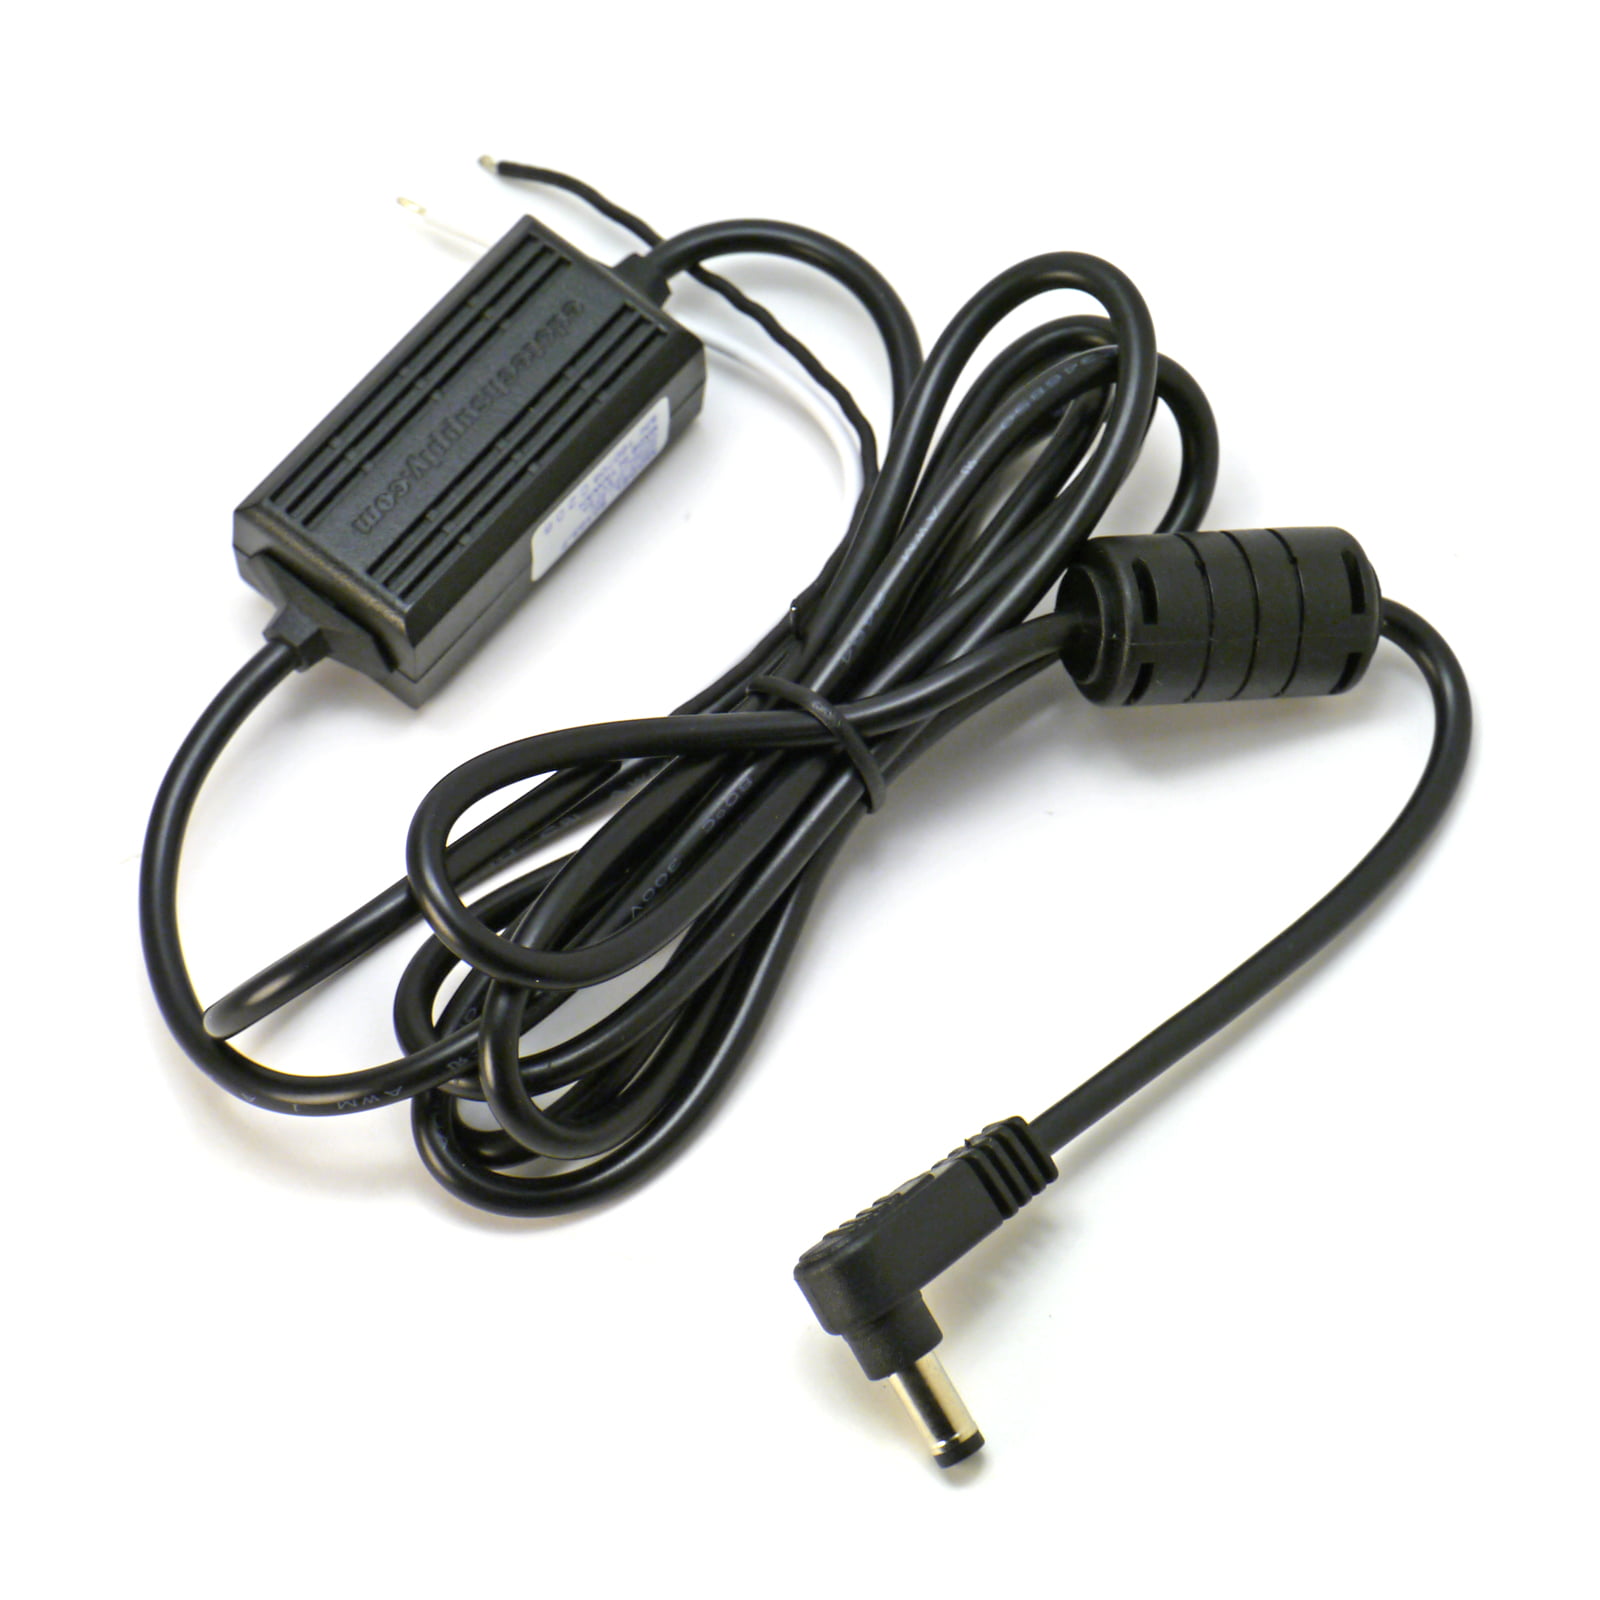 EDO Tech® Direct Hardwire Vehicle 5V Power Cord Adapter Kit for Sirius XM Radio PowerConnect Dock Onyx Edge Lynx Stratus Starmate